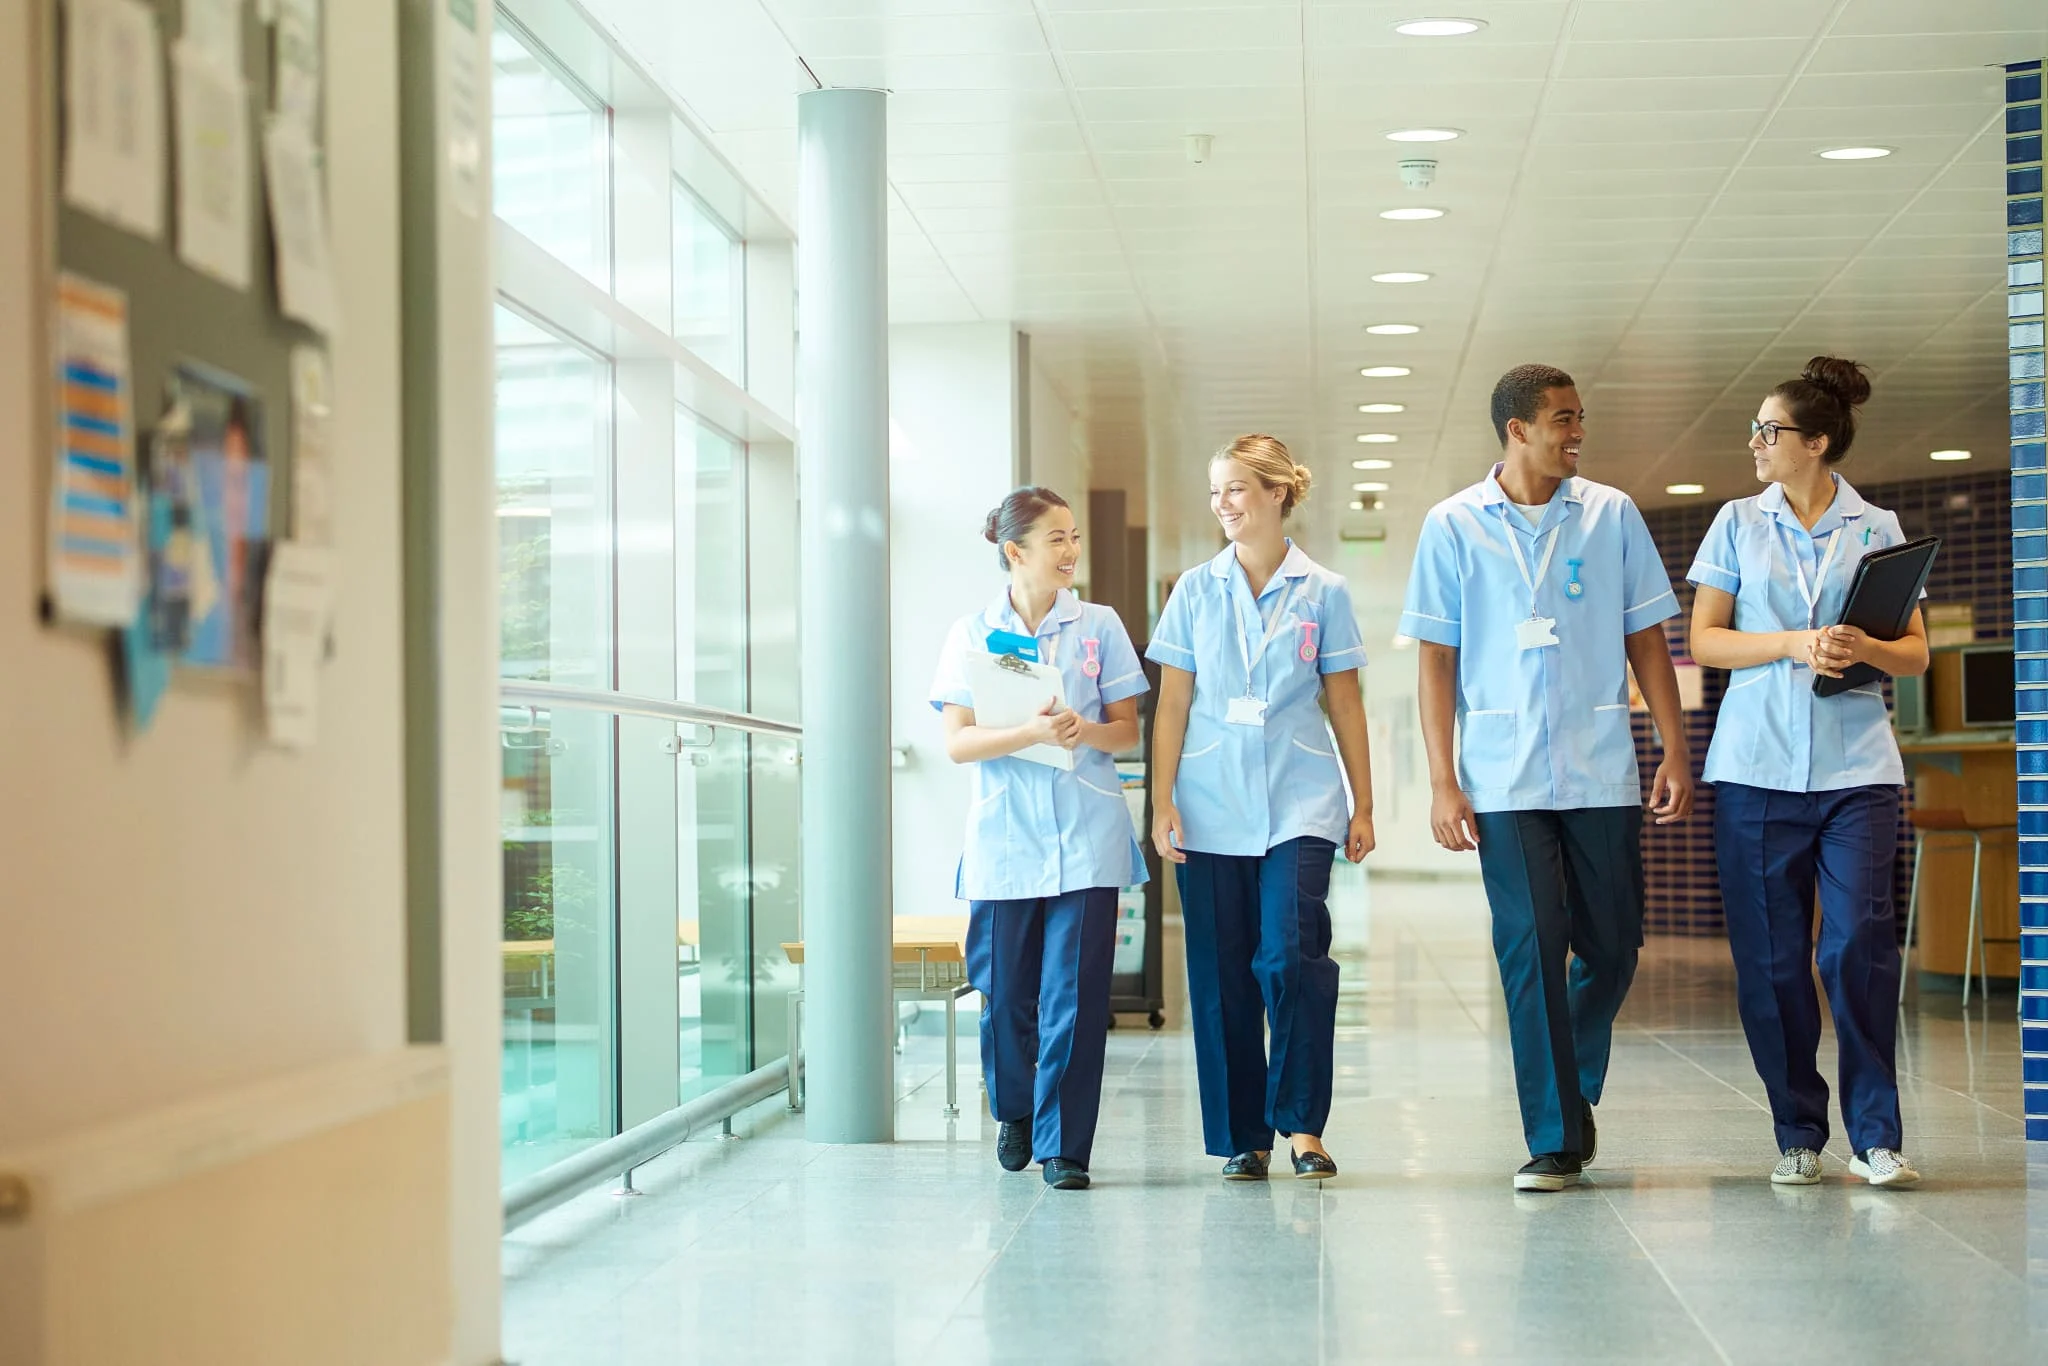 Young trainee nurses walking down hospital corridor